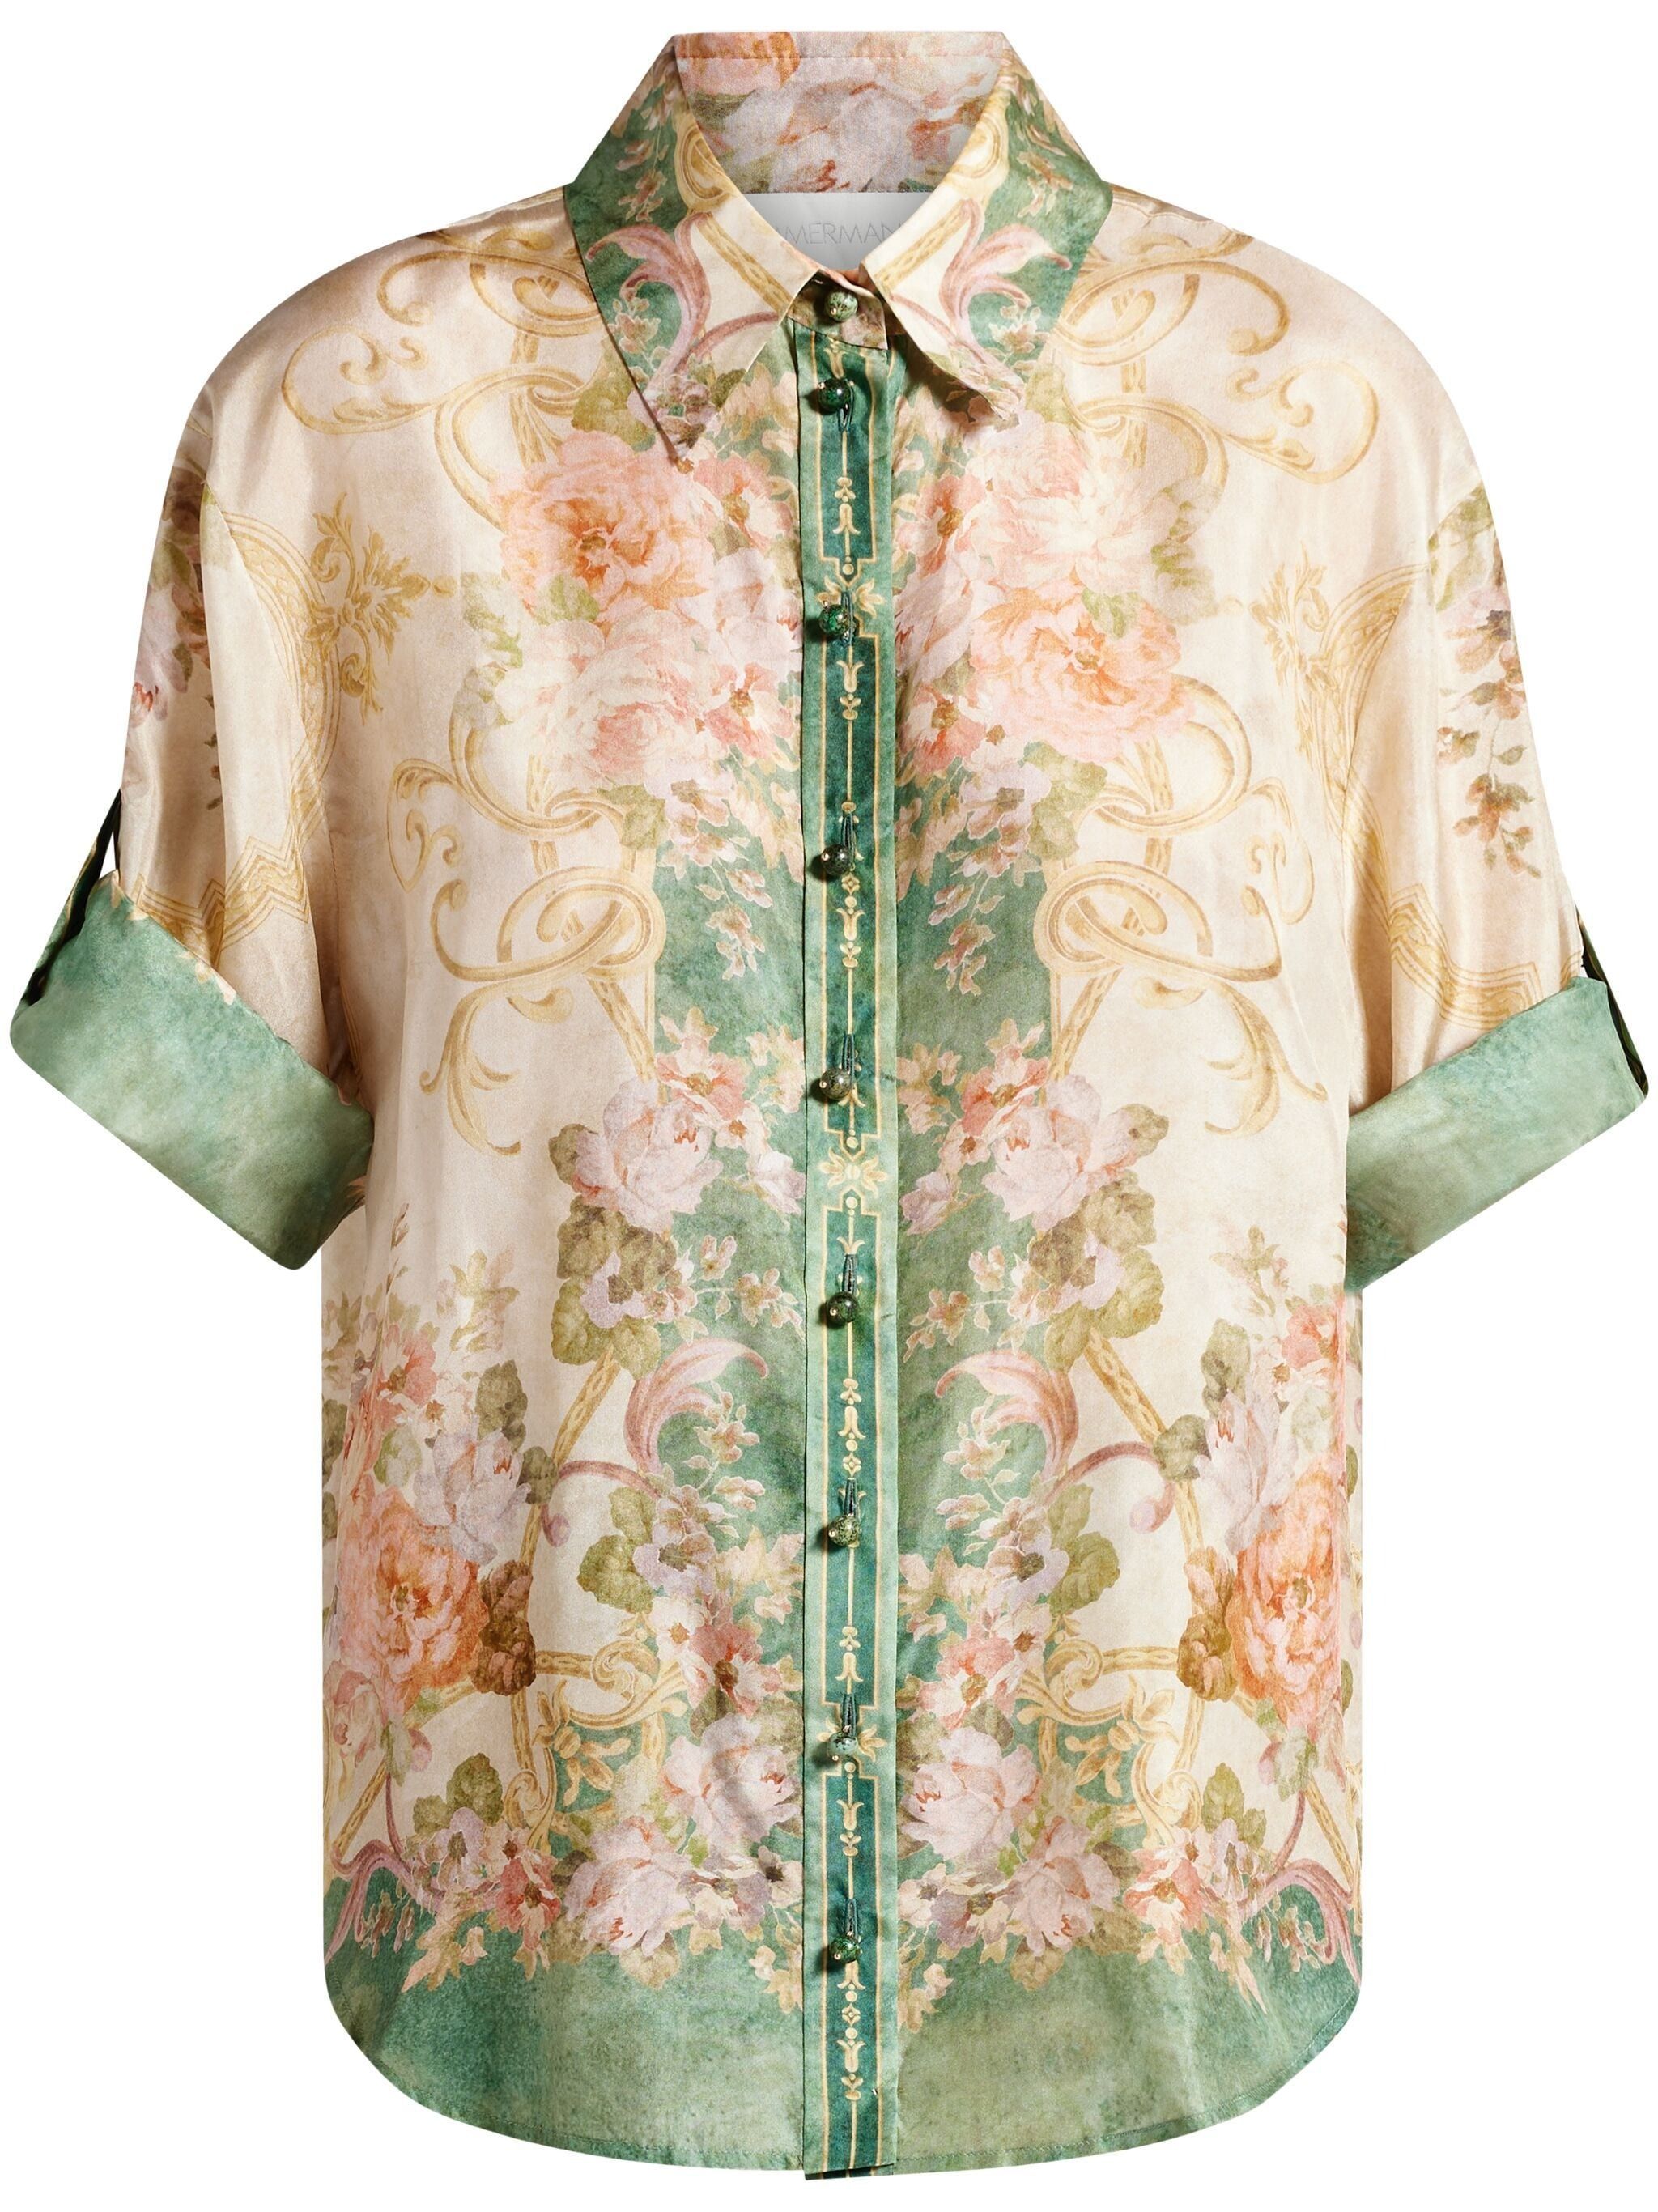 August floral-print silk shirt